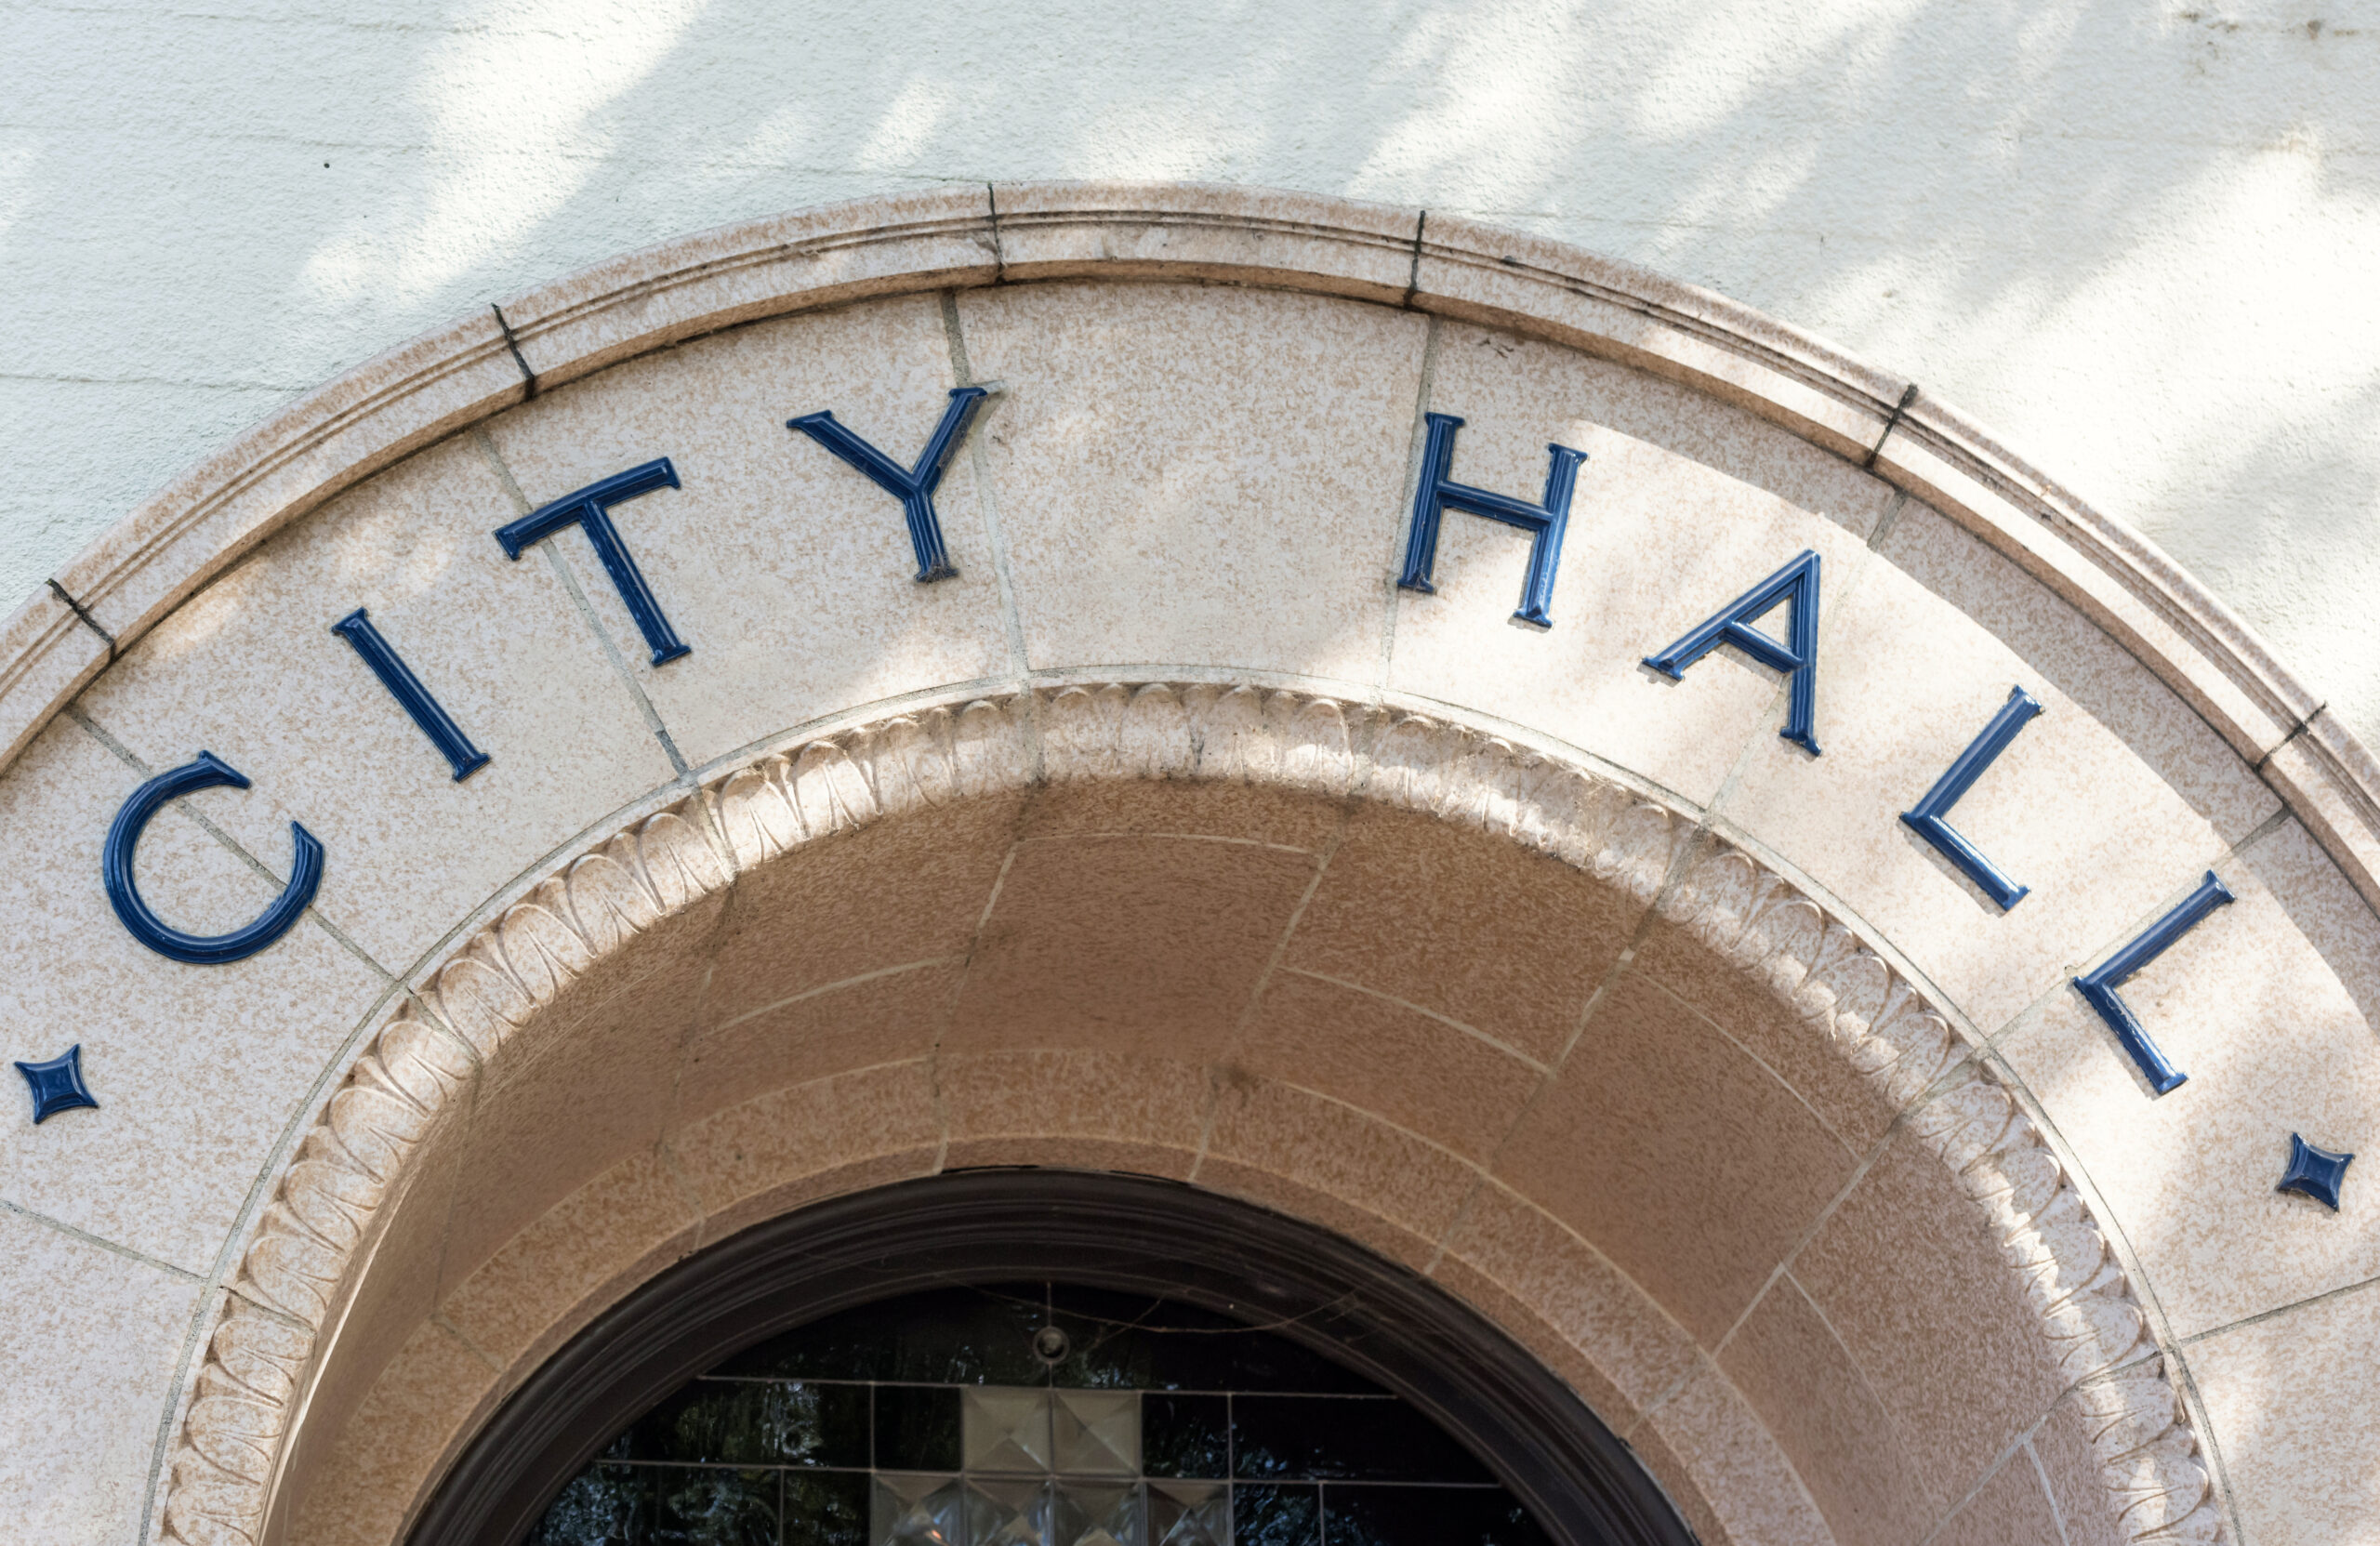 City Hall Sign